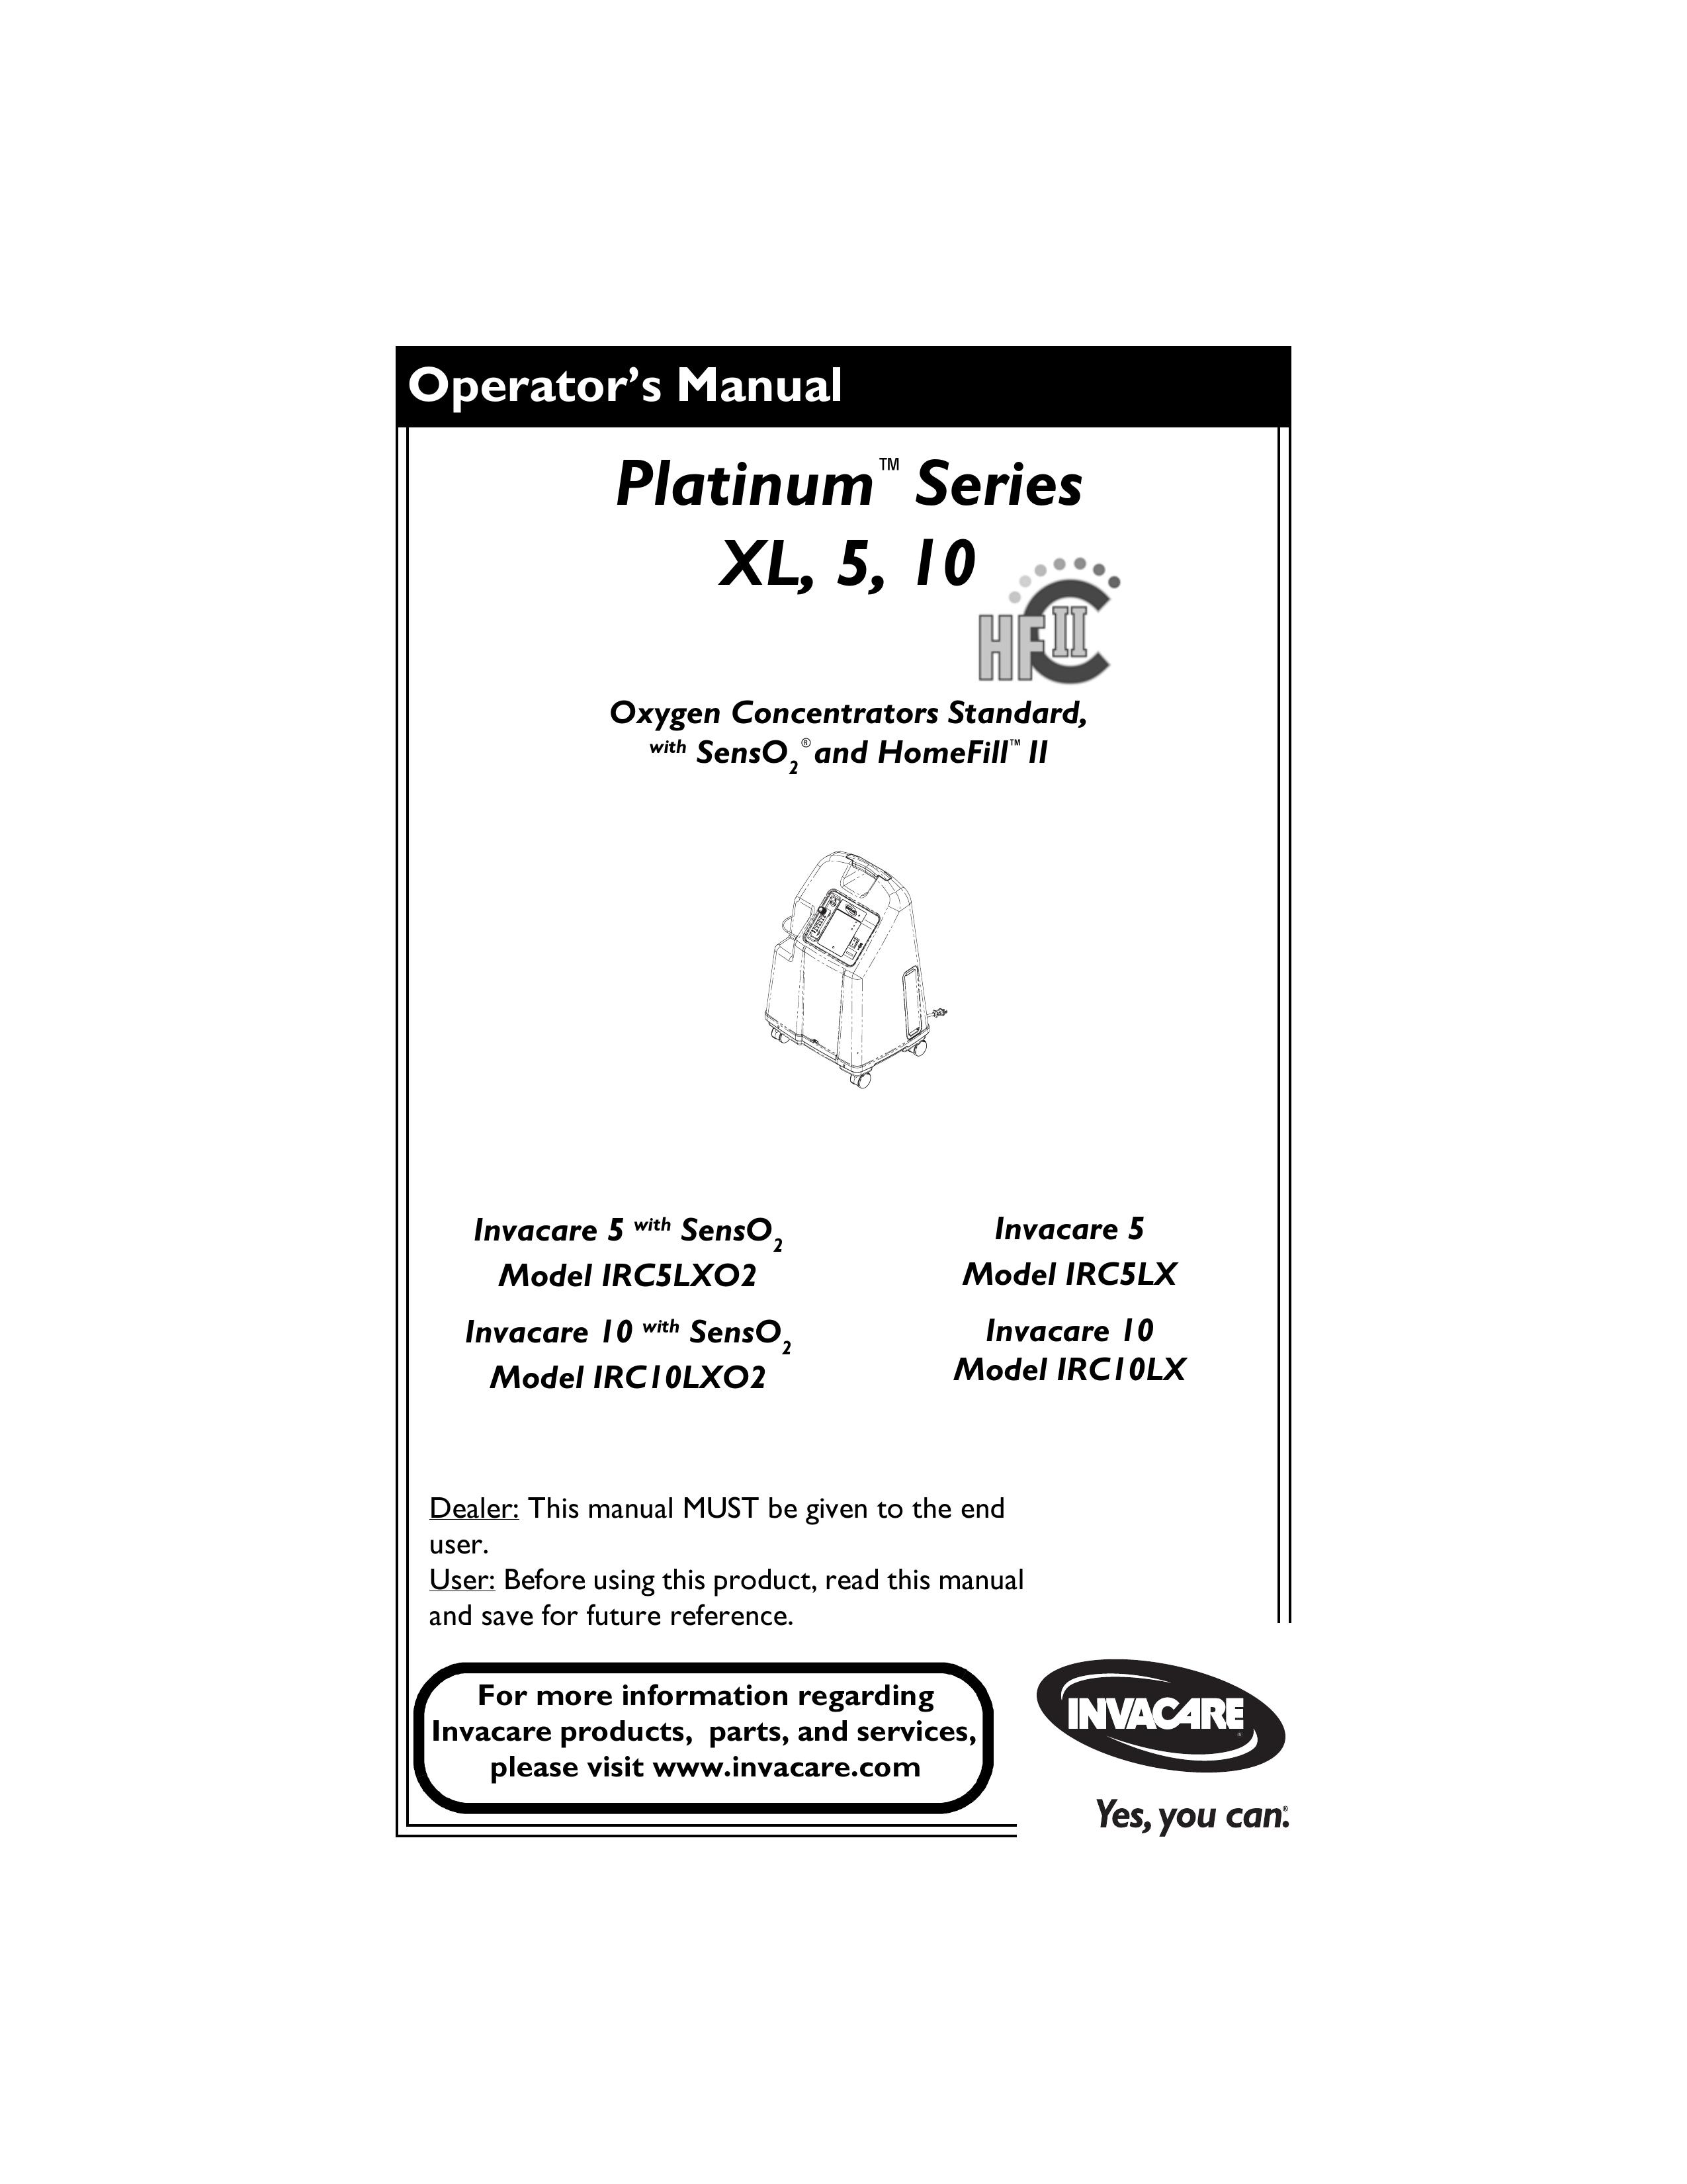 Invacare IRC10LXO2 Respiratory Product User Manual